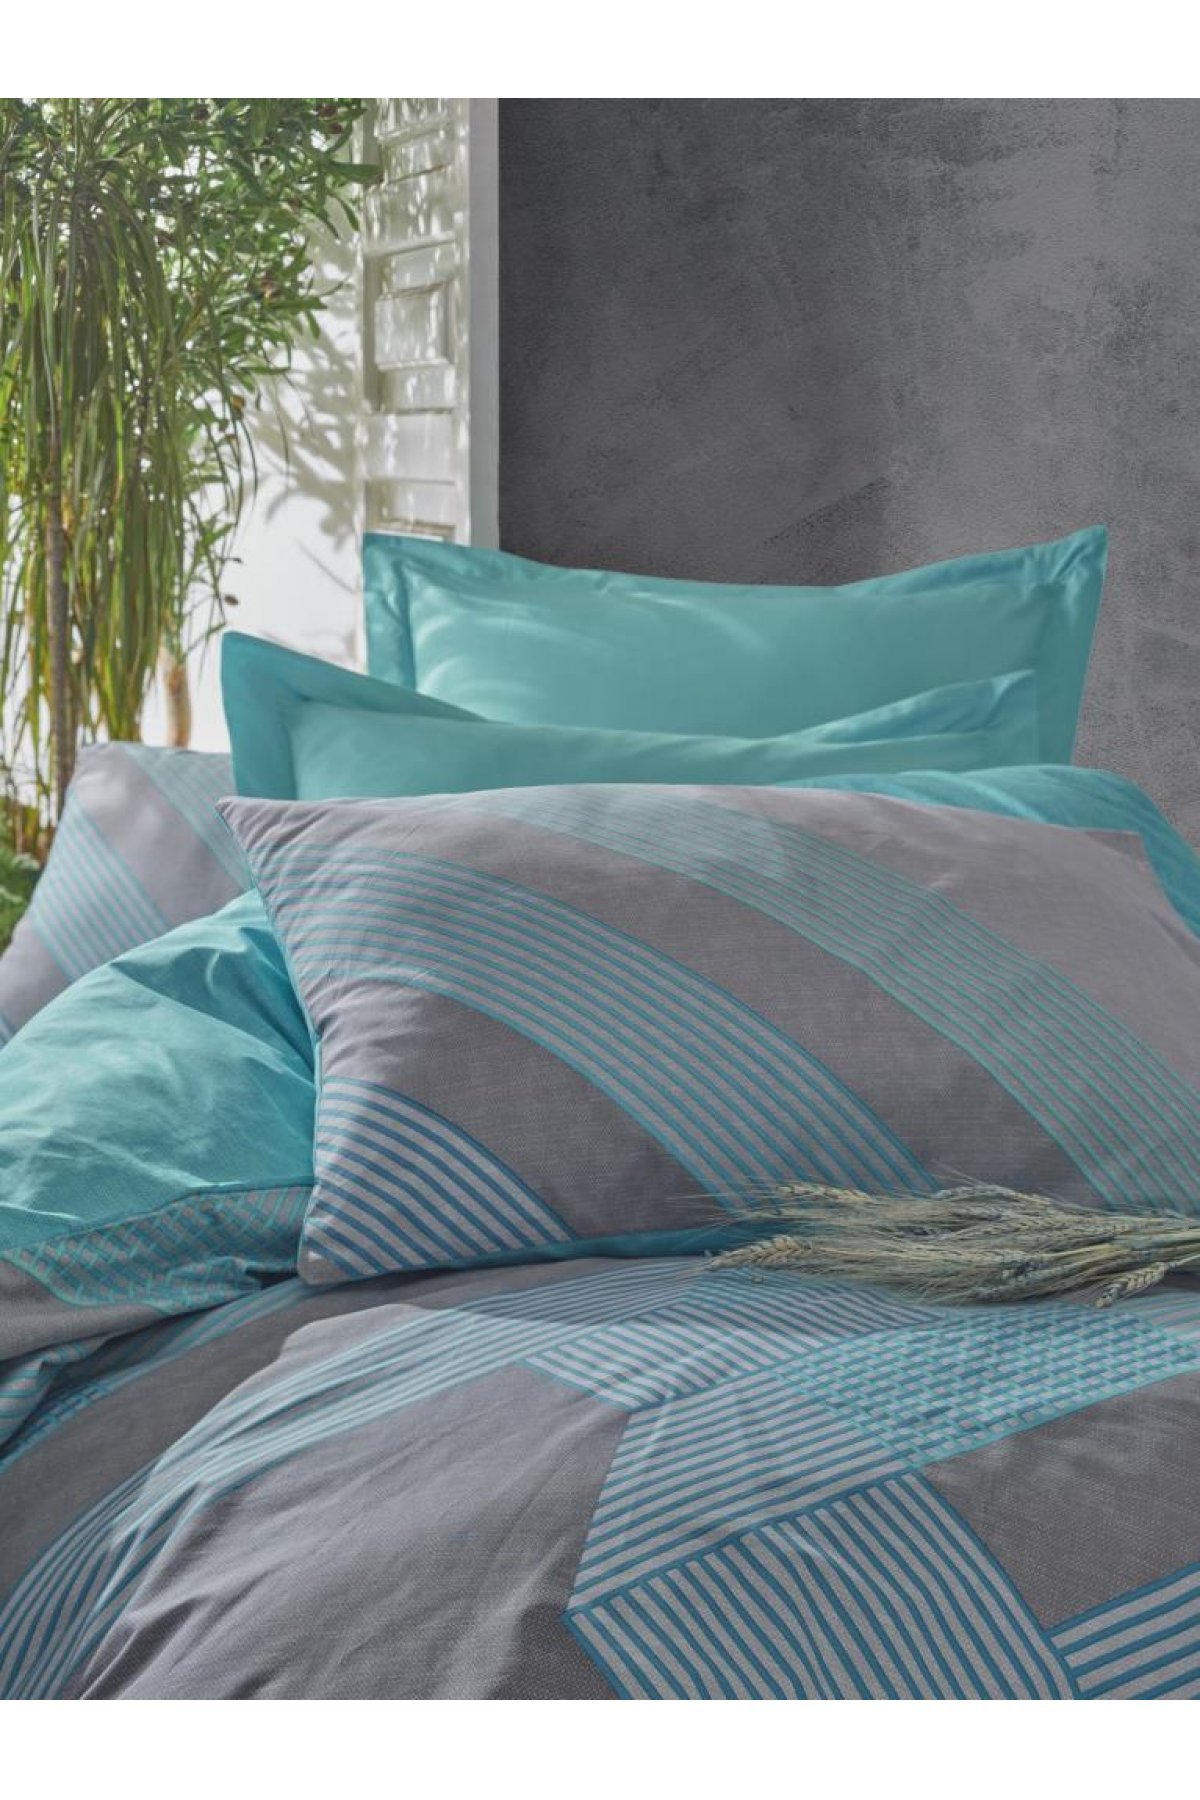 Bedding-Turquoise